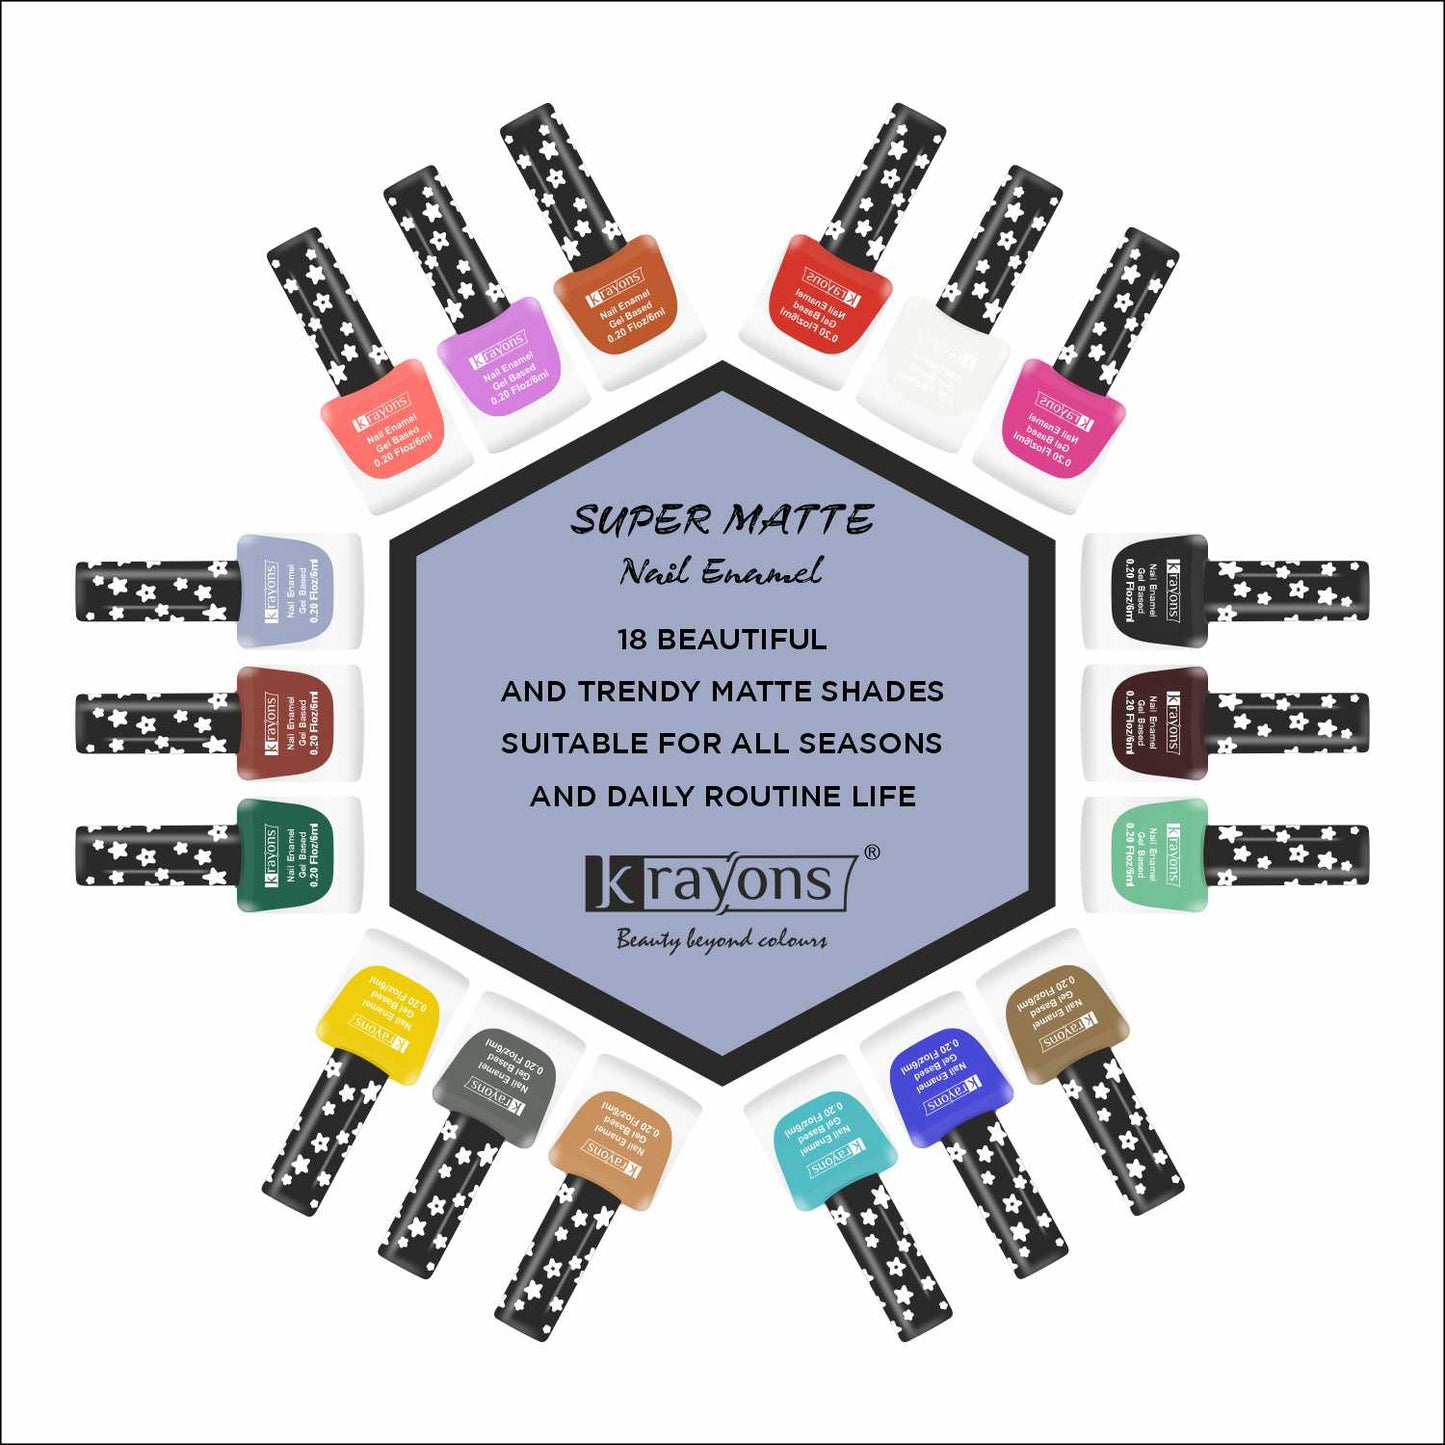 Krayons Cute Super Matte Finish Nail Enamel, Quick Dry, LongLasting, Blossom Peach, Plum Matte, Chestnut Matte, 6ml Each (Pack of 3)